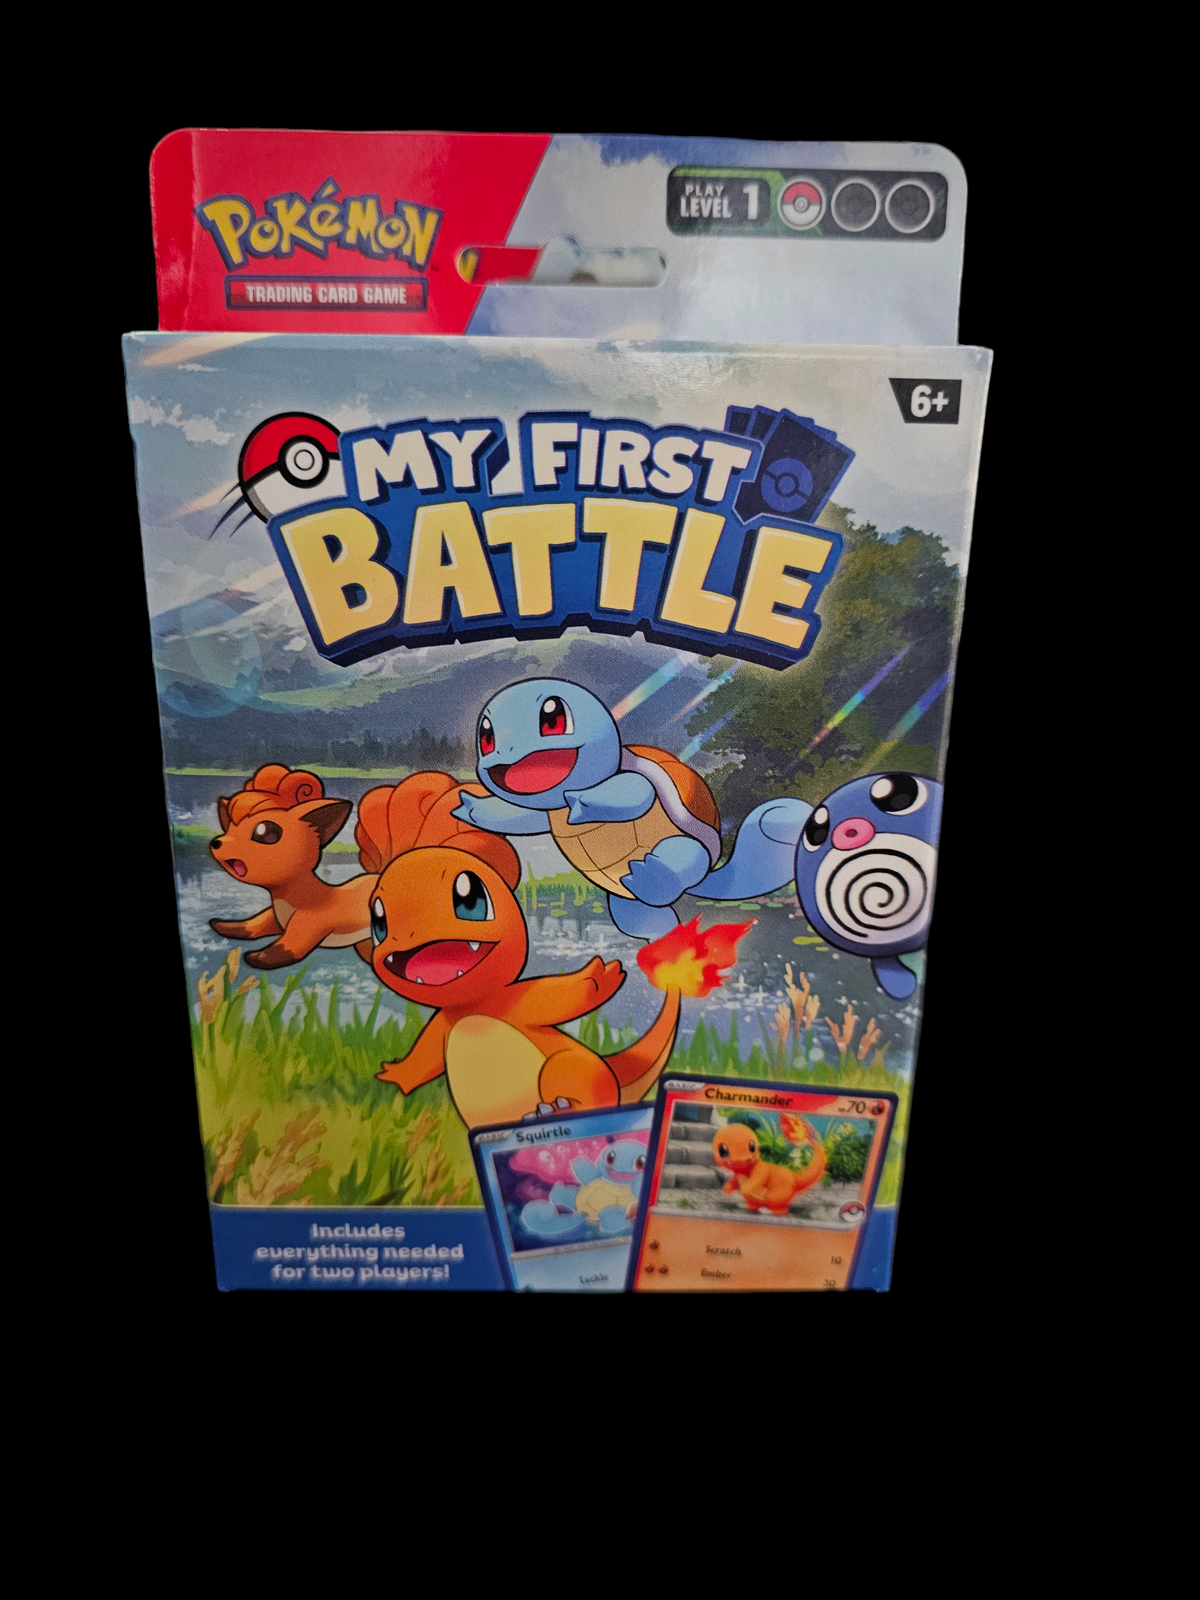 Pokémon My First Battle